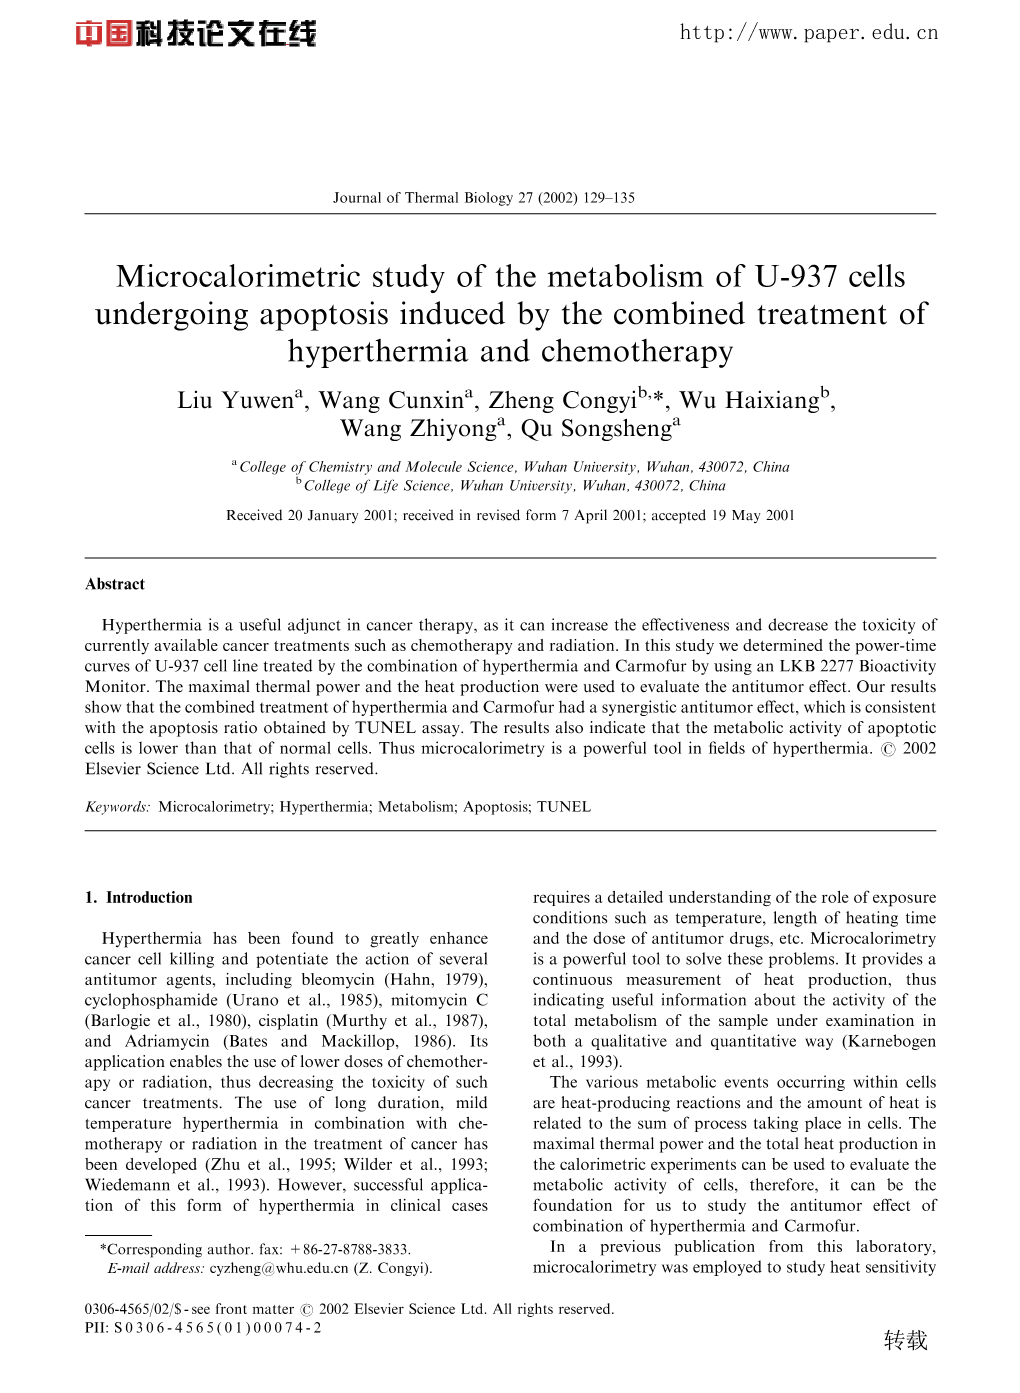 Microcalorimetric Study of the Metabolism of U-937 Cells